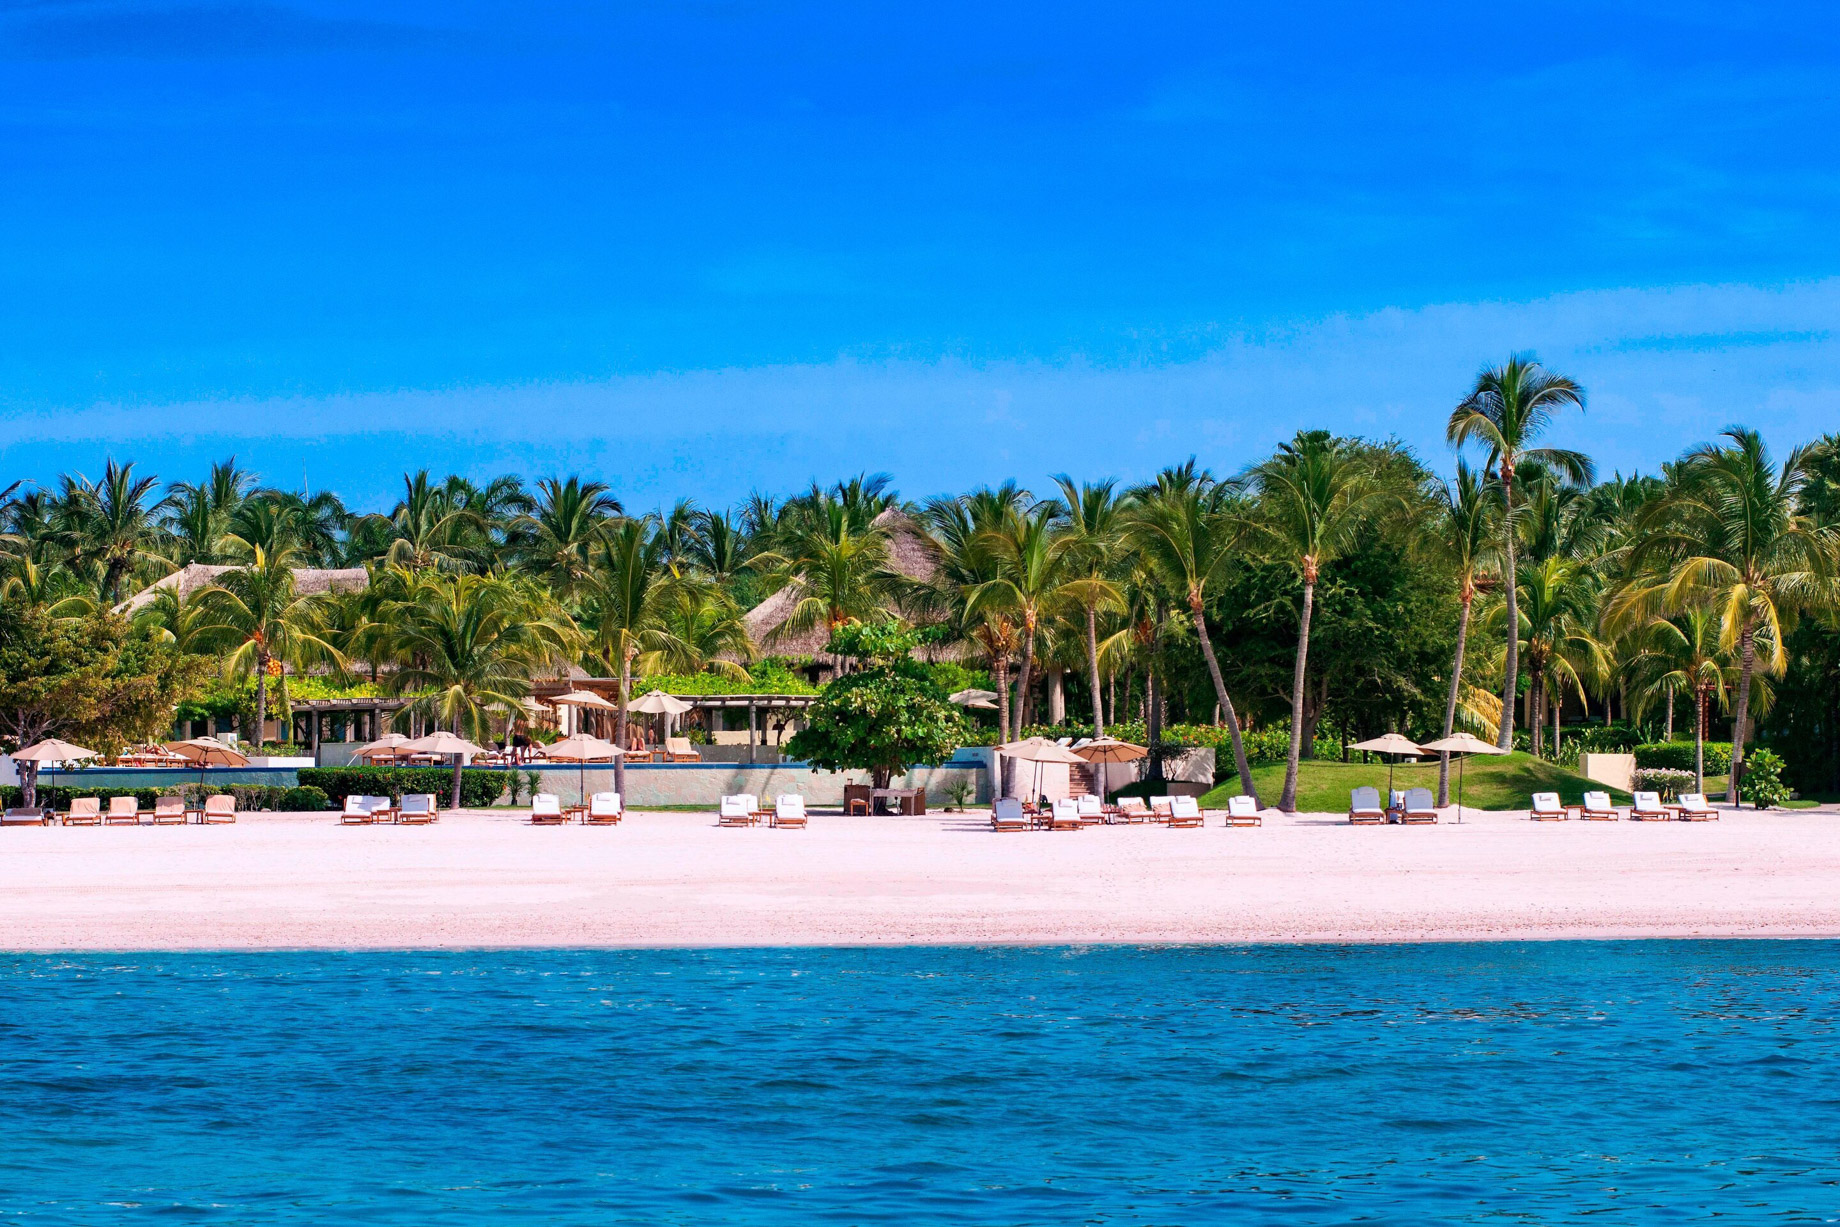 The St. Regis Punta Mita Resort - Nayarit, Mexico - Exterior Beach View